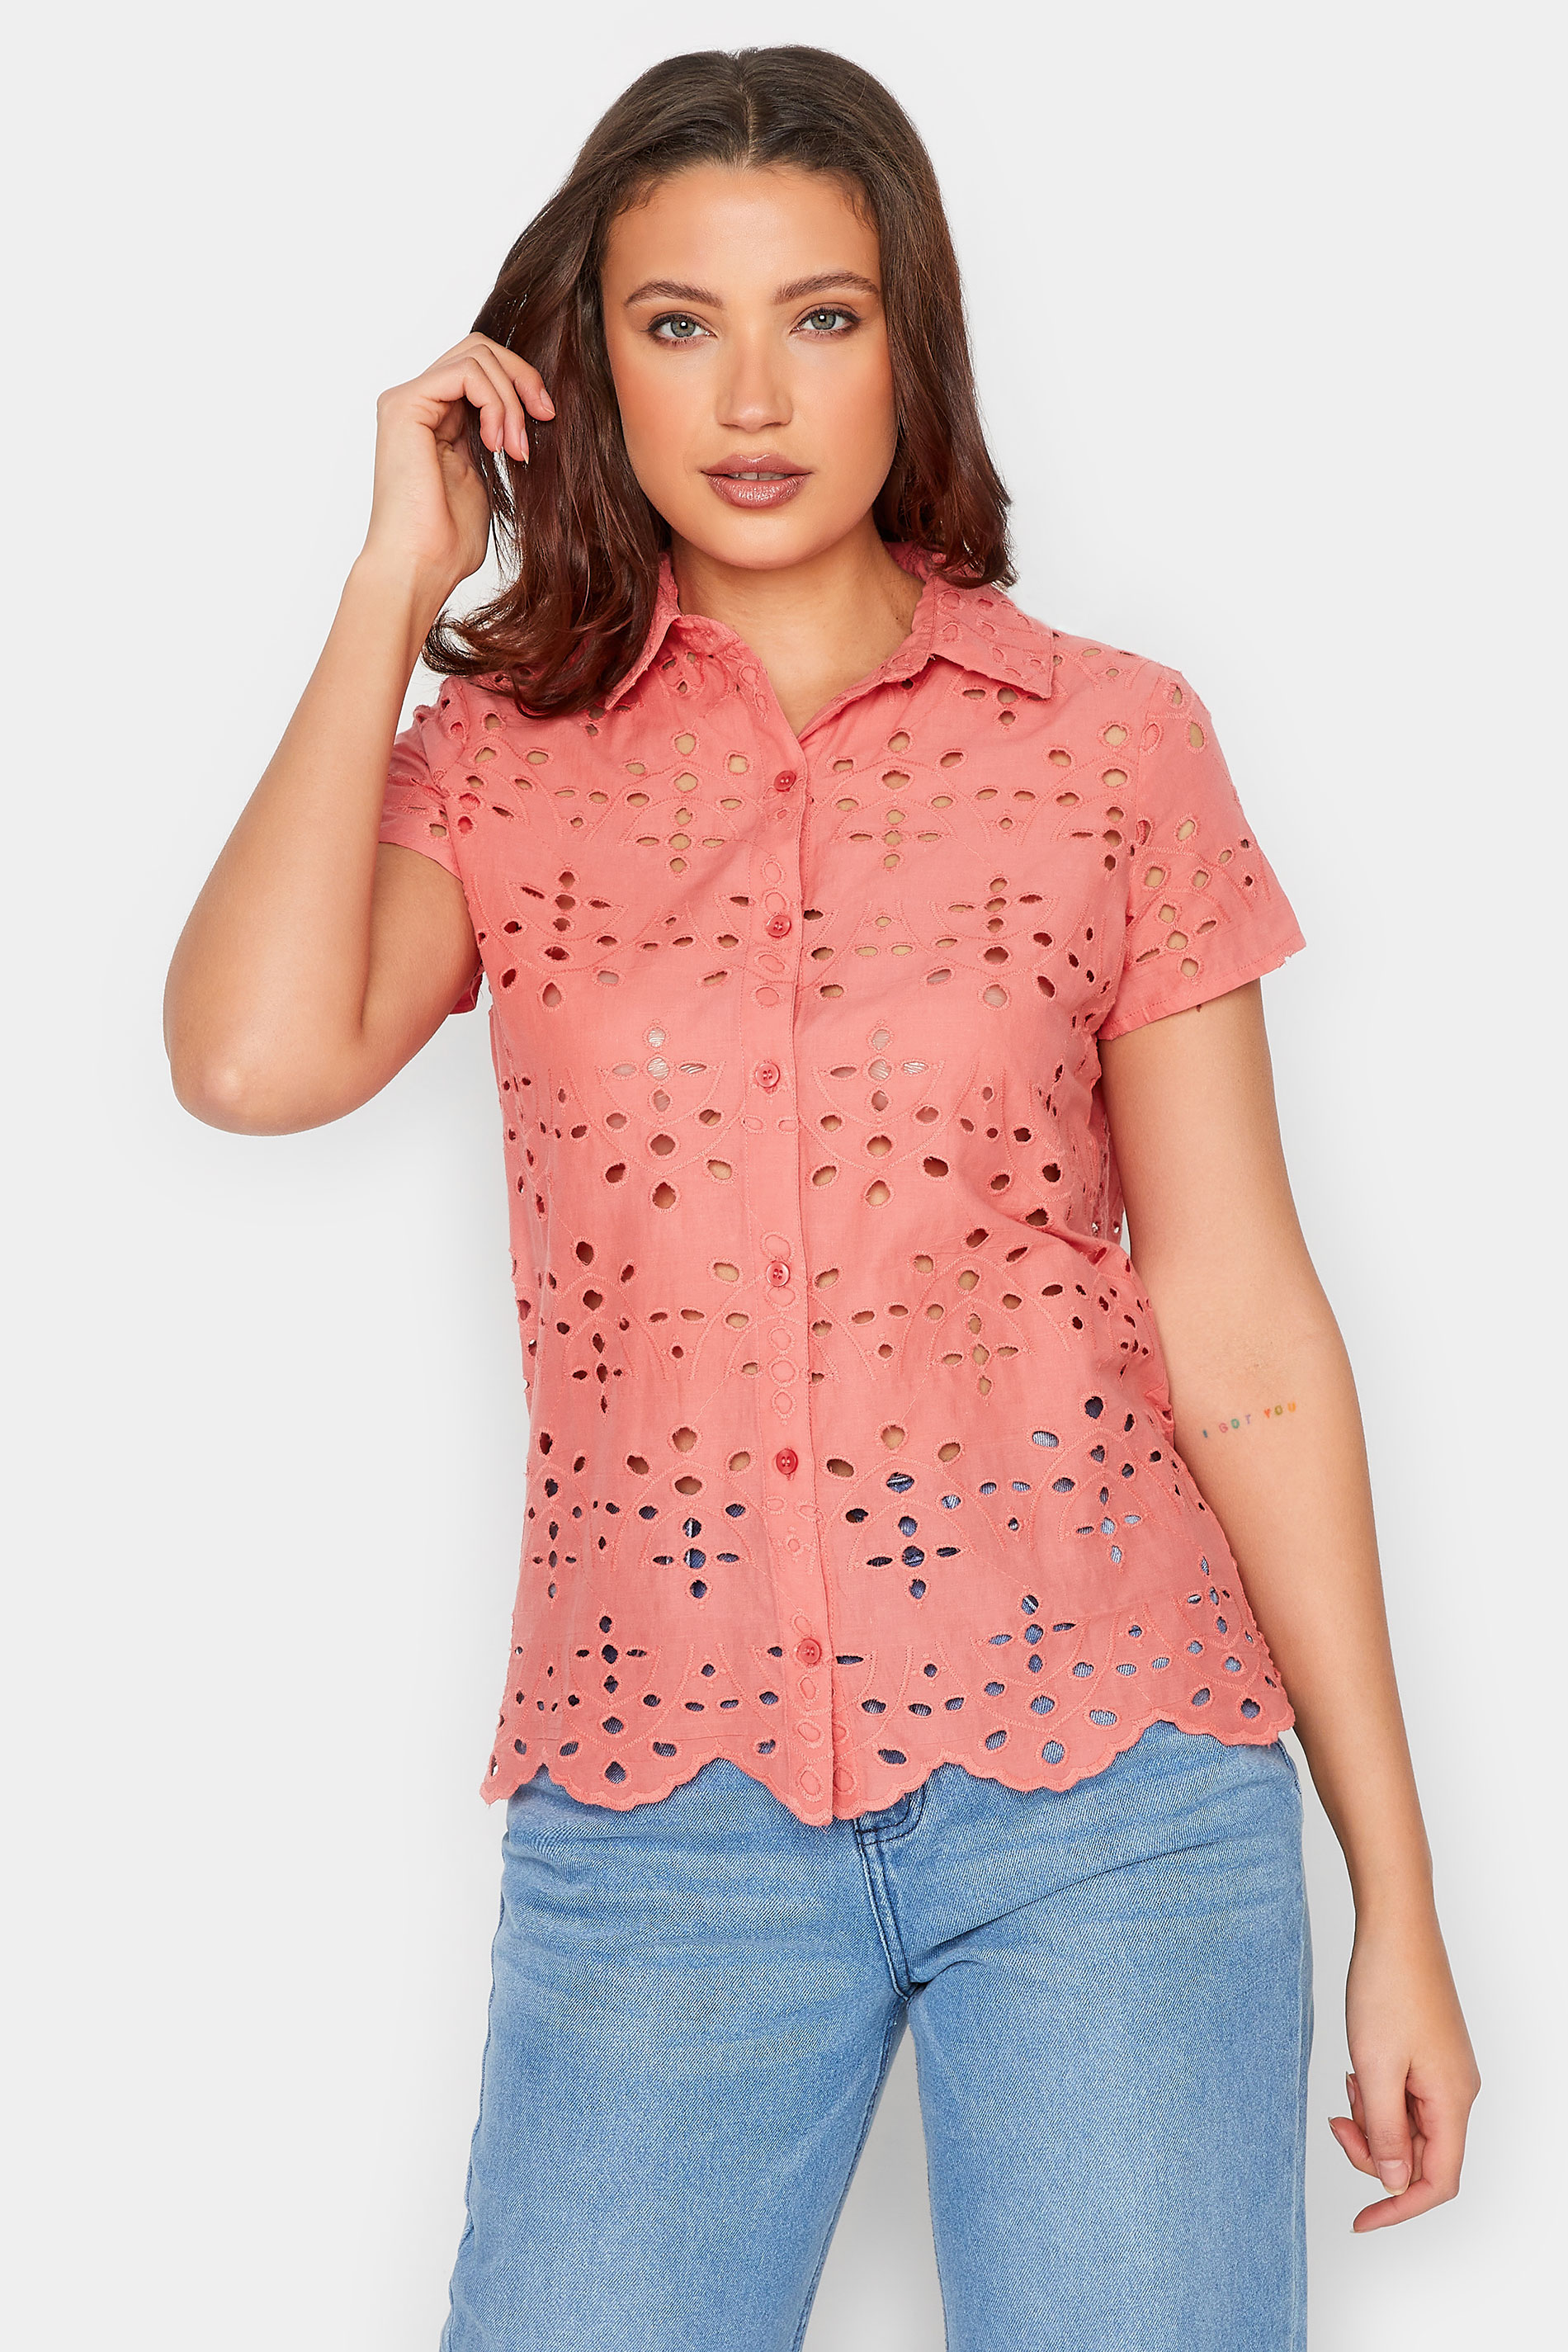 LTS Tall Women's Coral Pink Broderie Shirt | Long Tall Sally 1